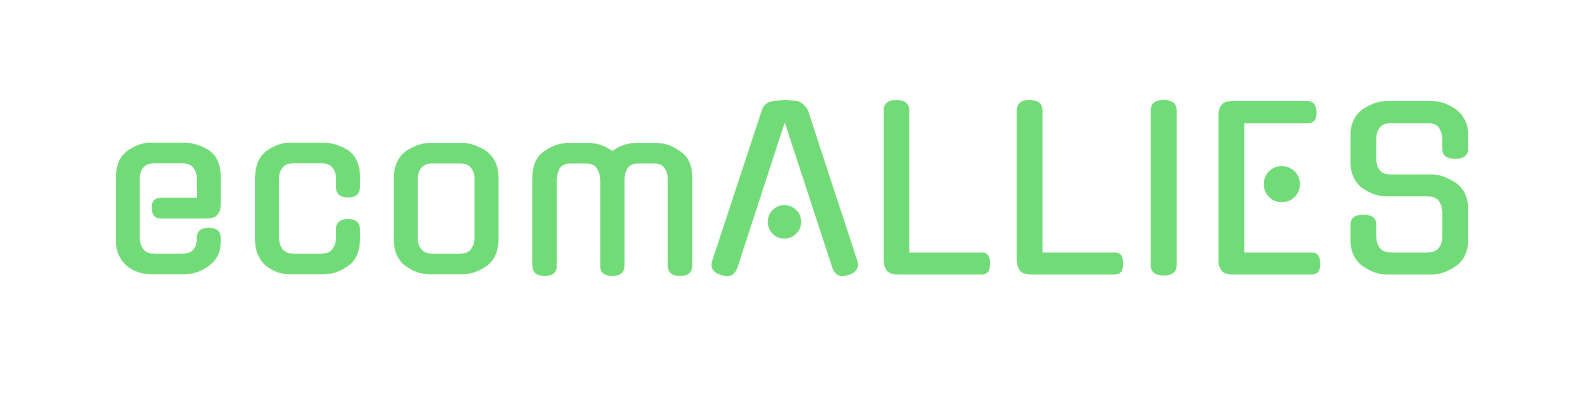 eComAllies Logo.png